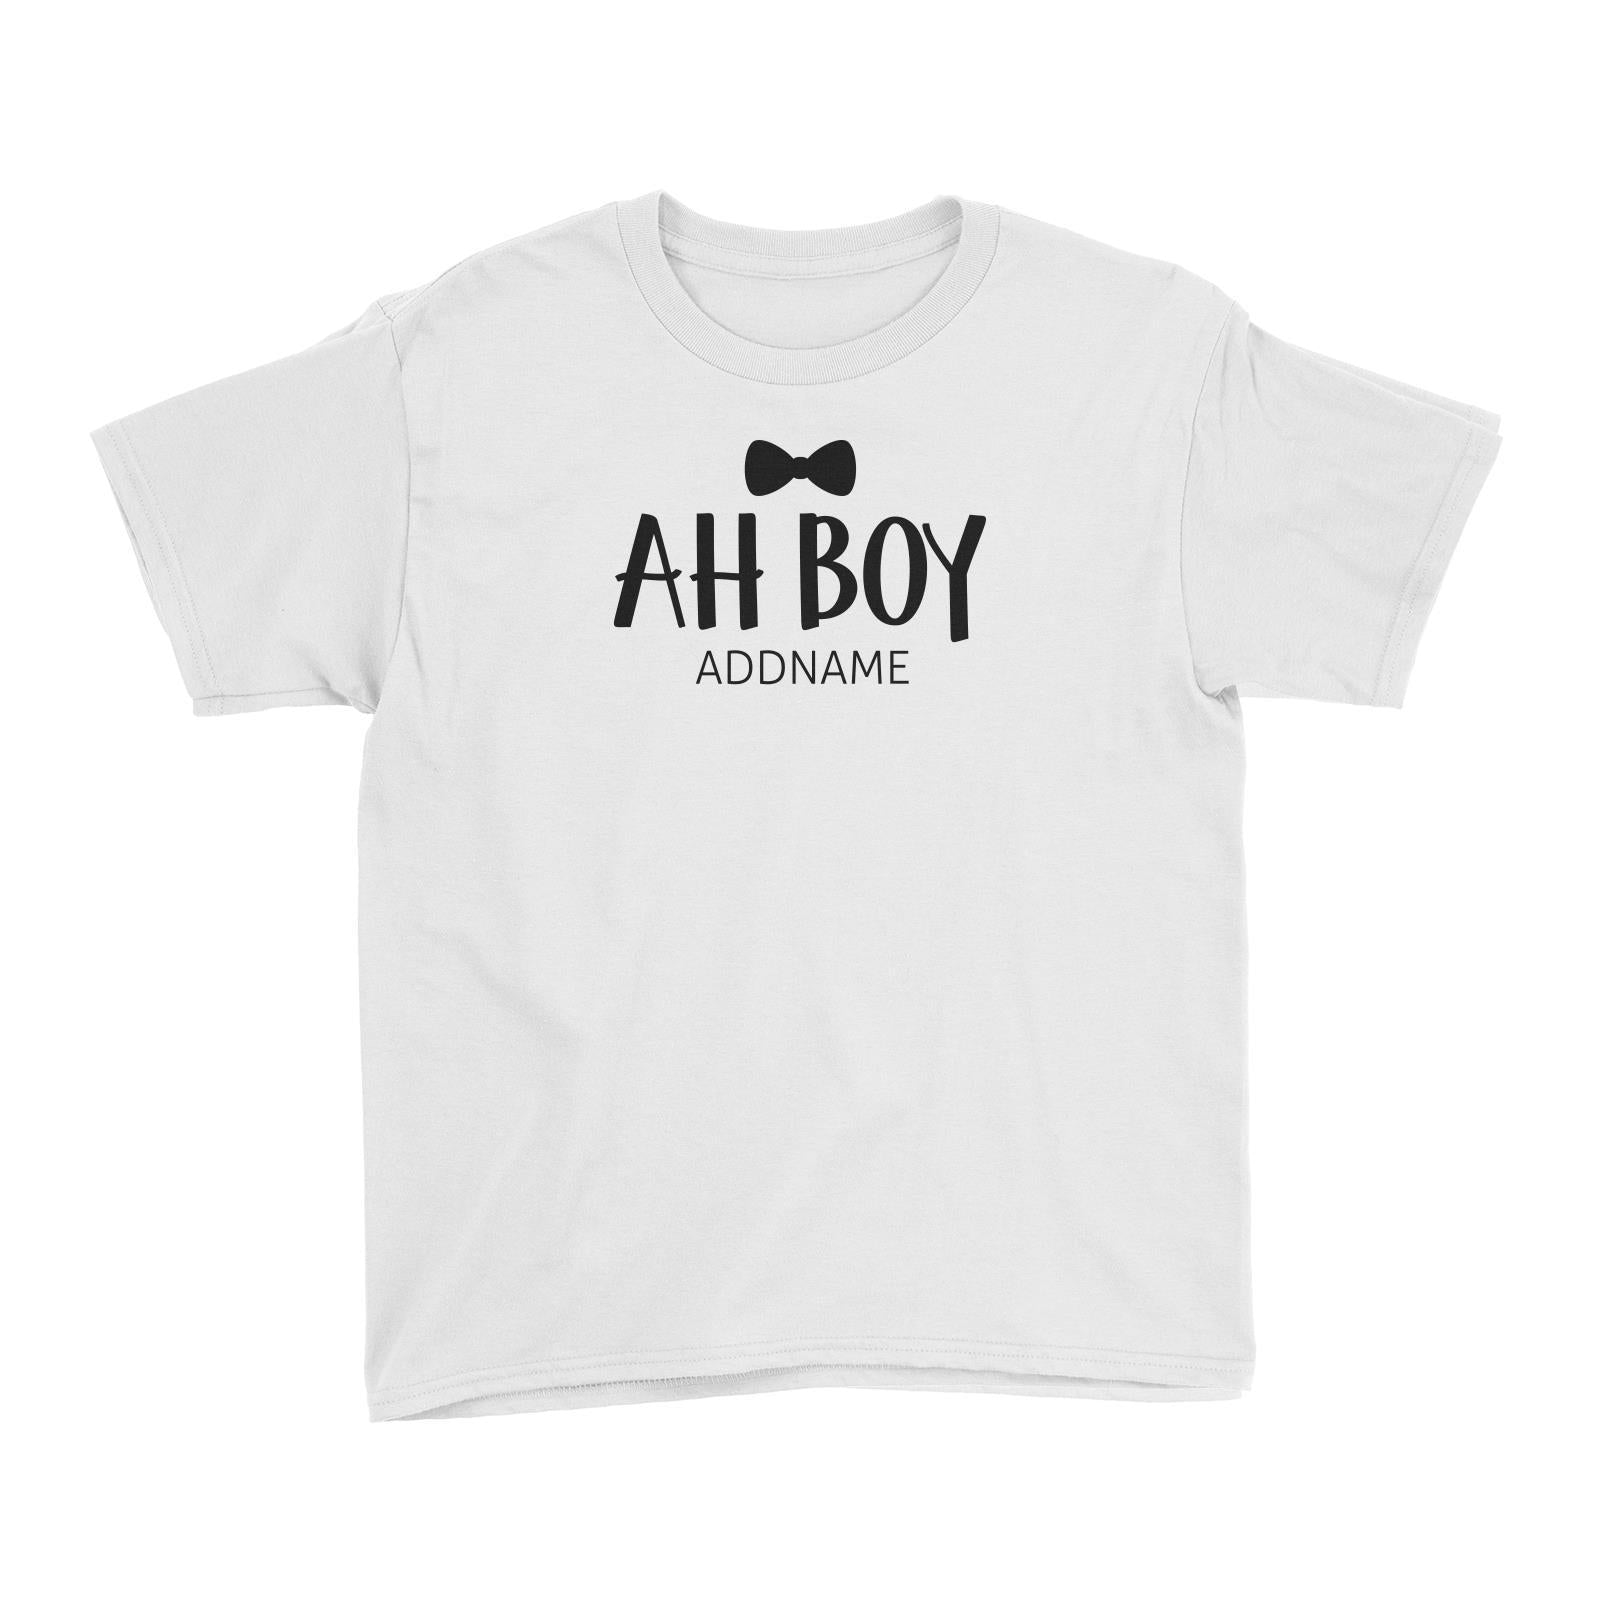 Ah Boy with Black Bow Tie Kid's T-Shirt